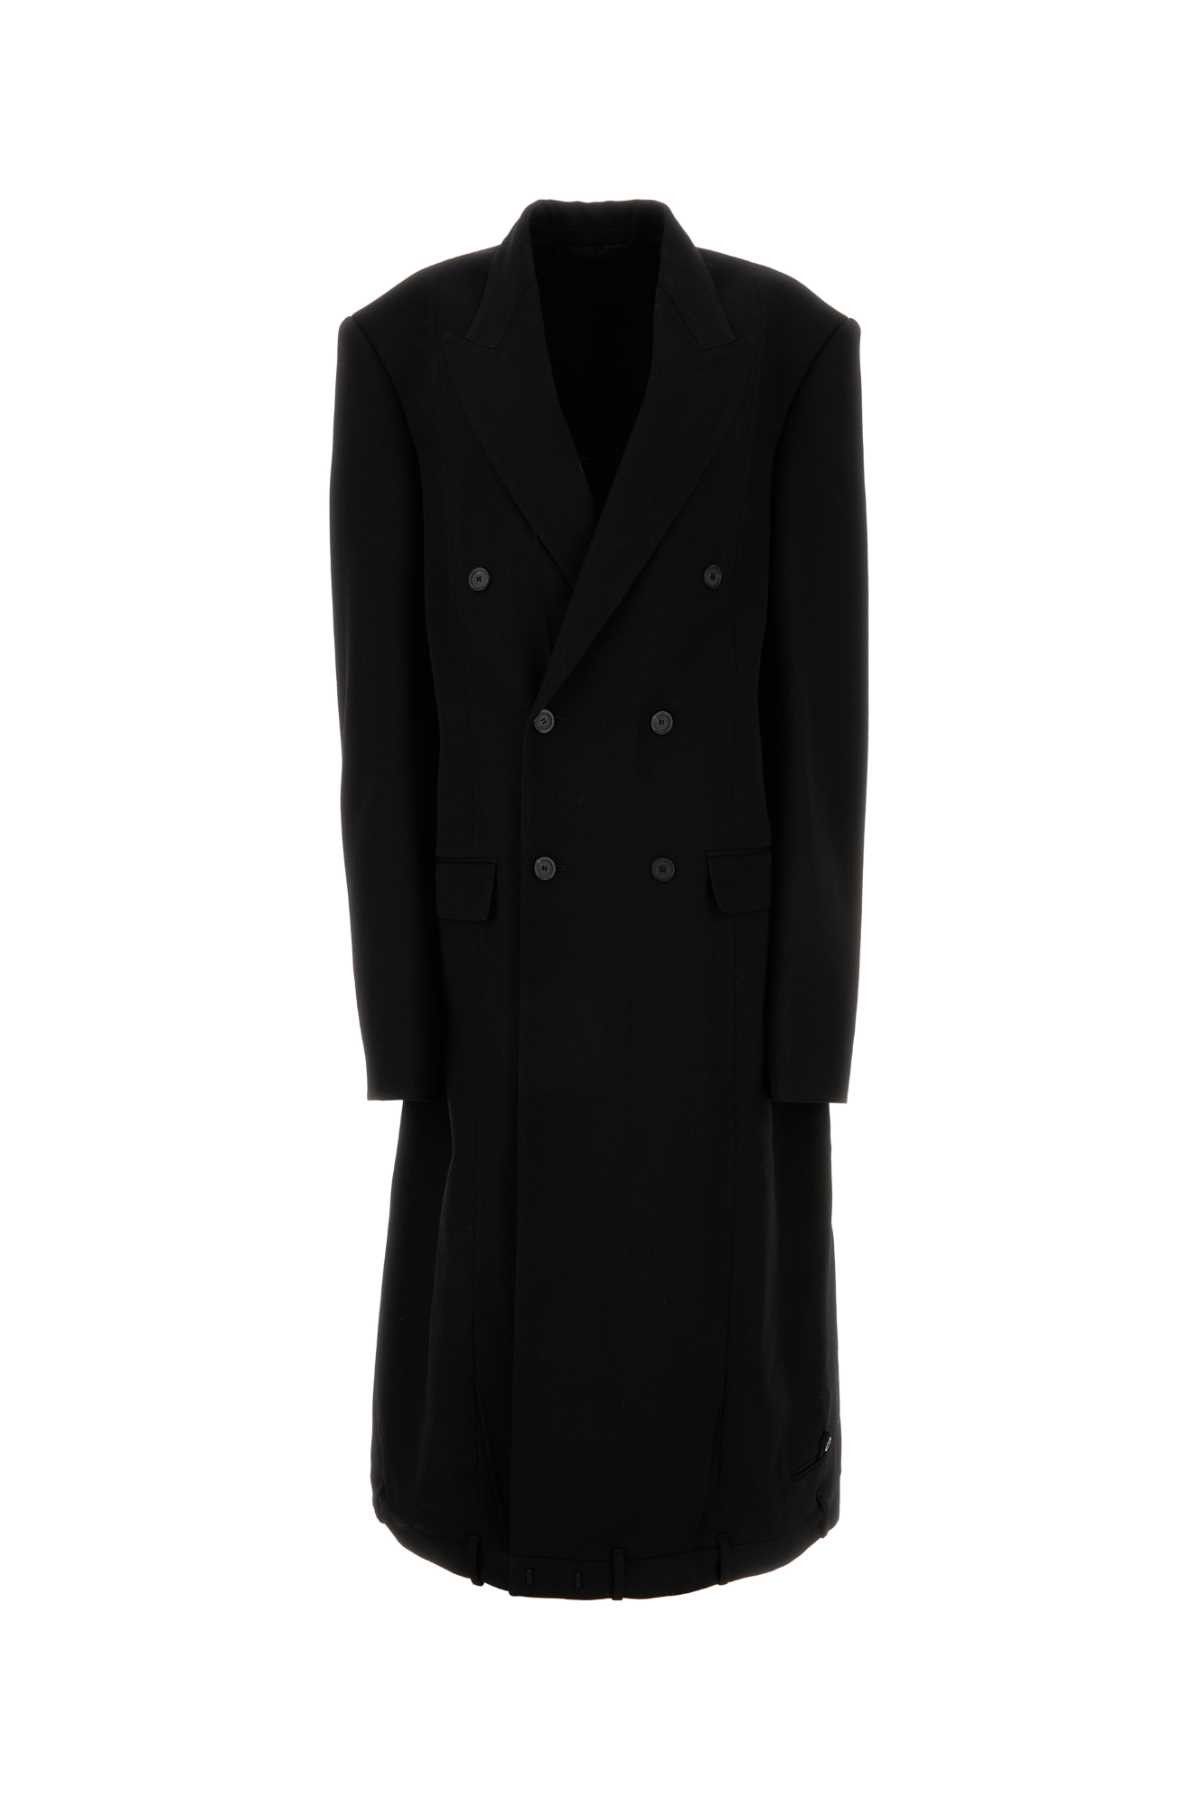 Balenciaga Black Wool Oversize Coat | Grailed